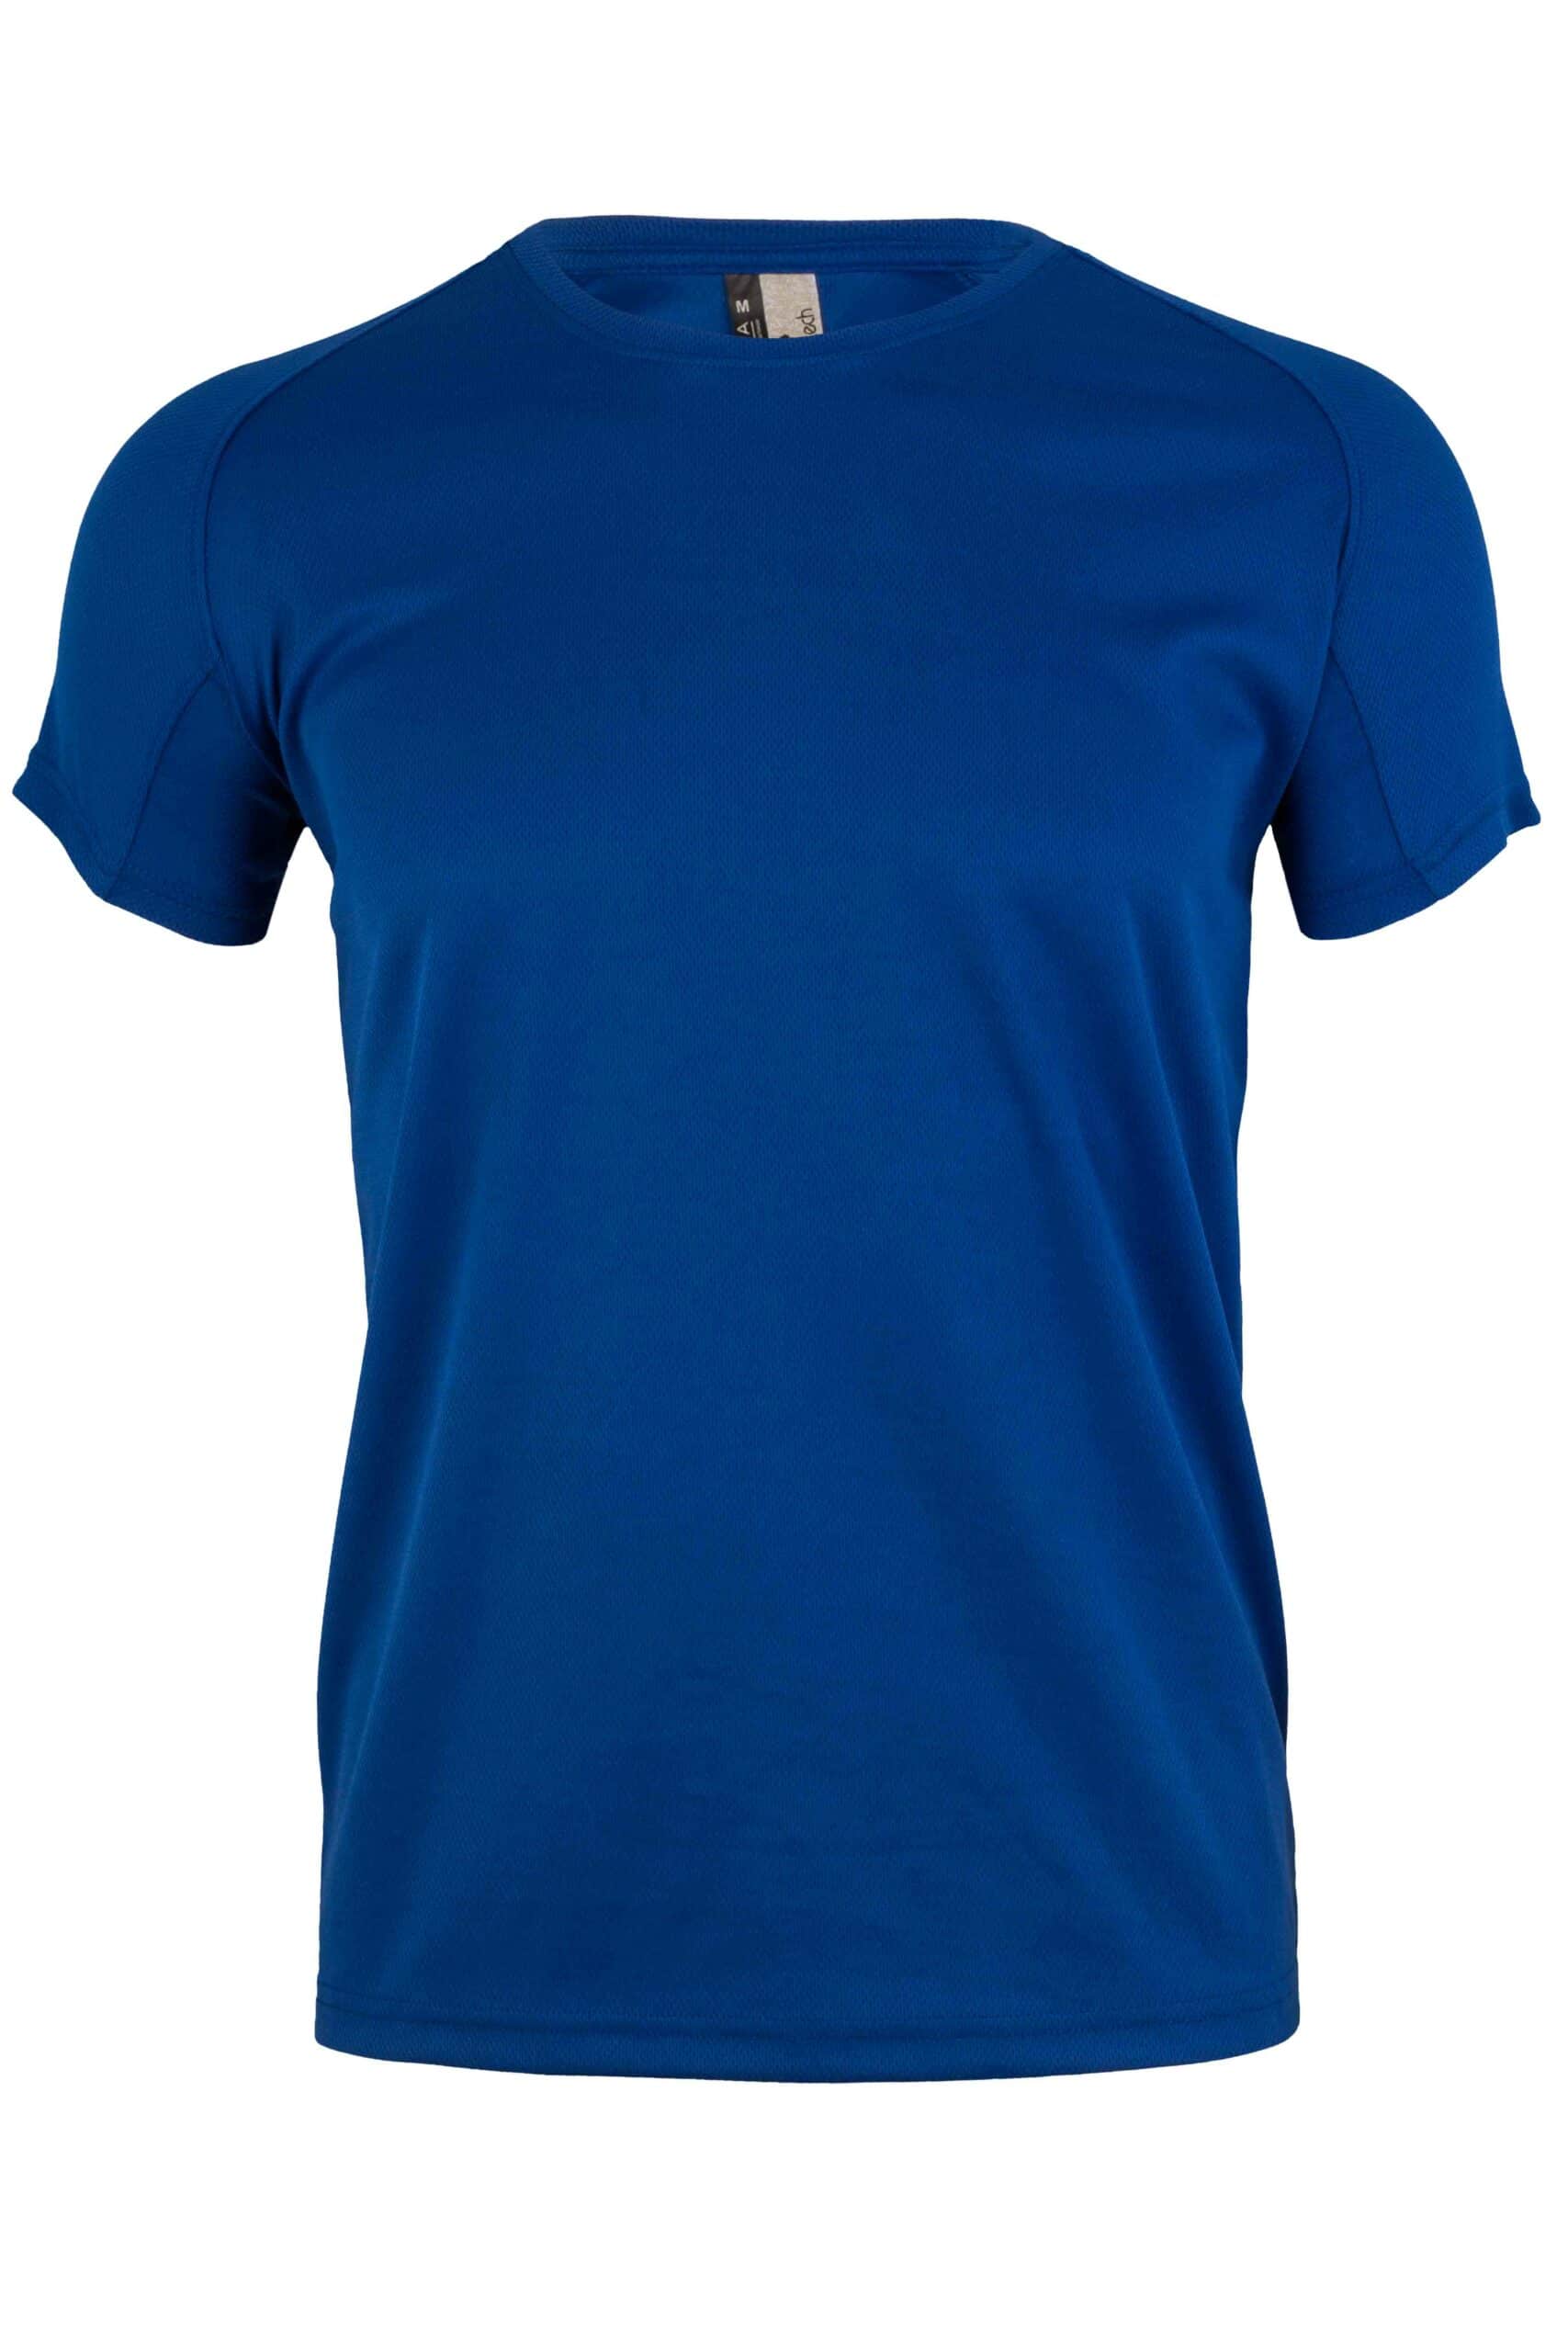 Mukua Mk520v Camiseta TÉcnica Manga Corta Royal Blue